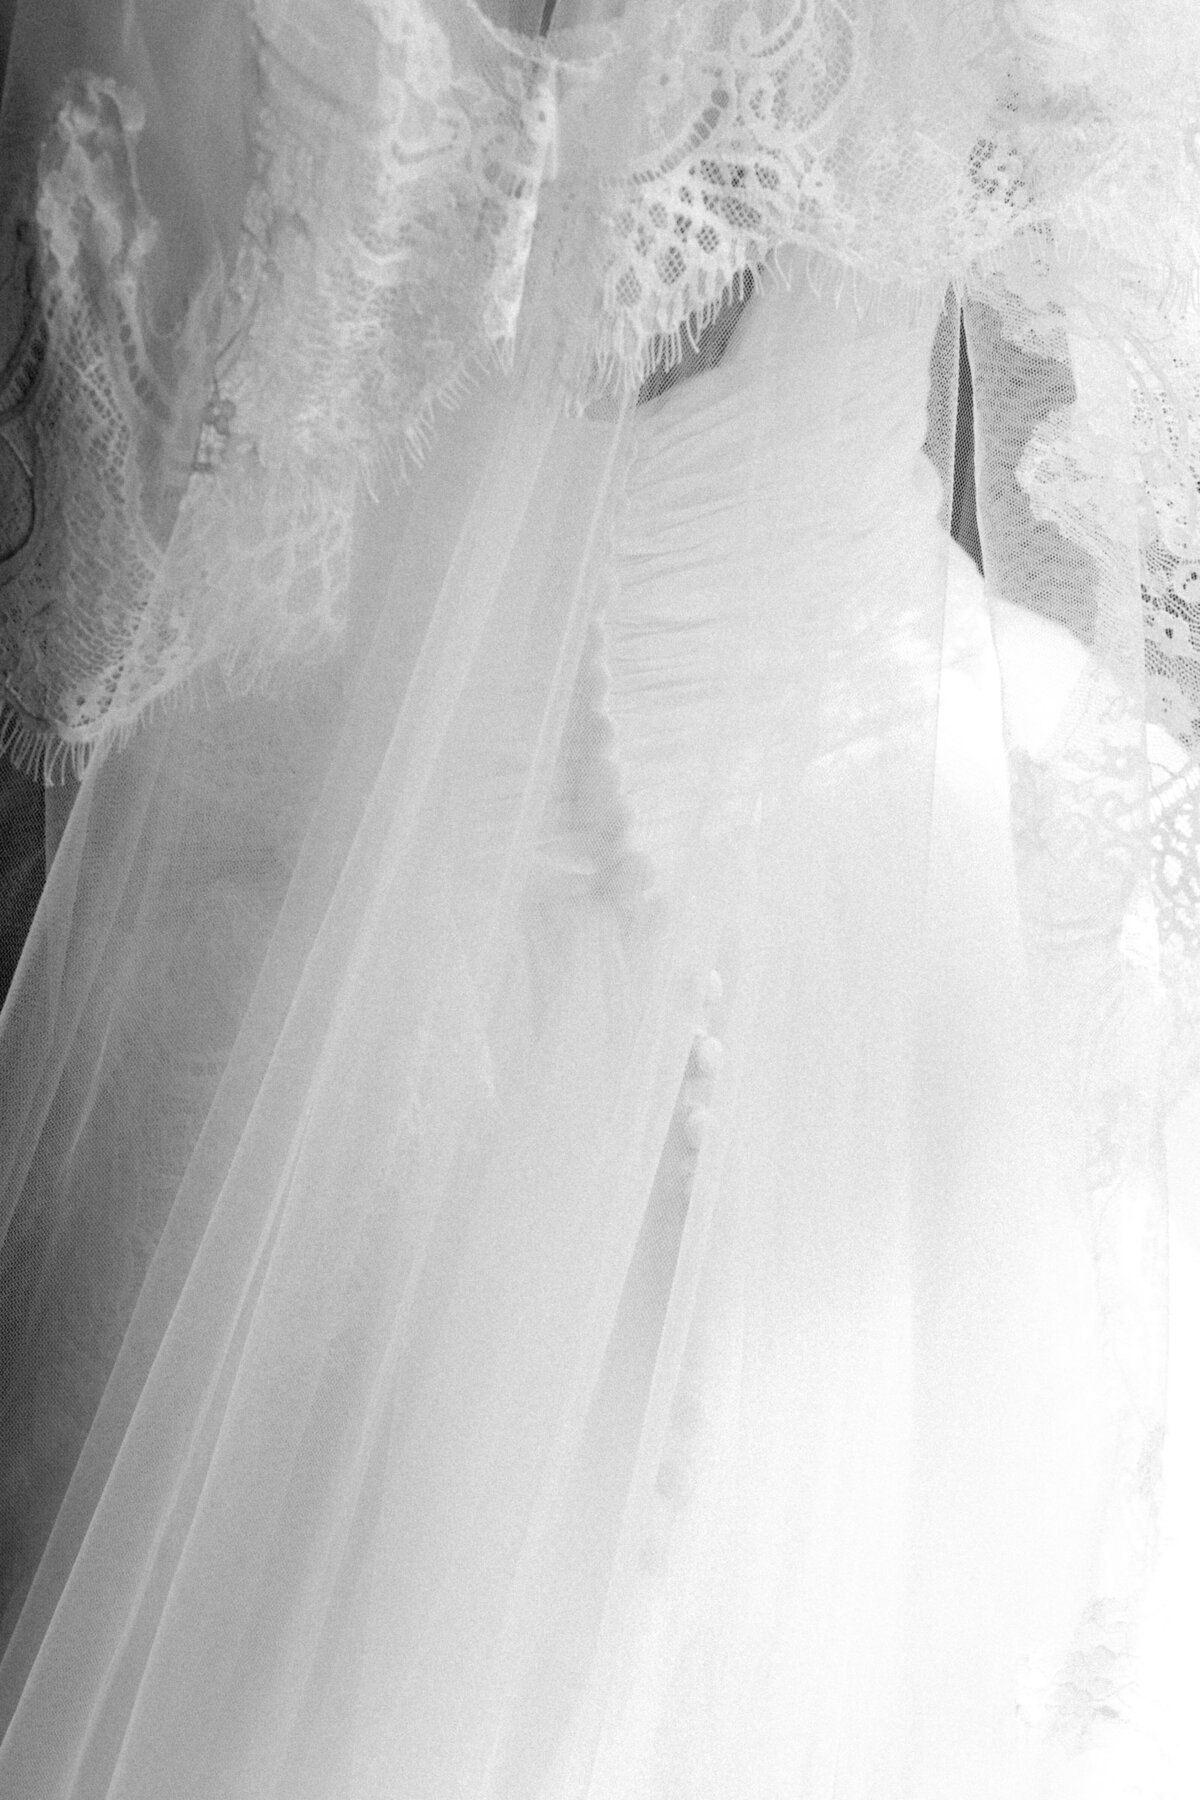 Bay Area Luxury Wedding Photographer - Carolina Herrera Bridal Gown-89